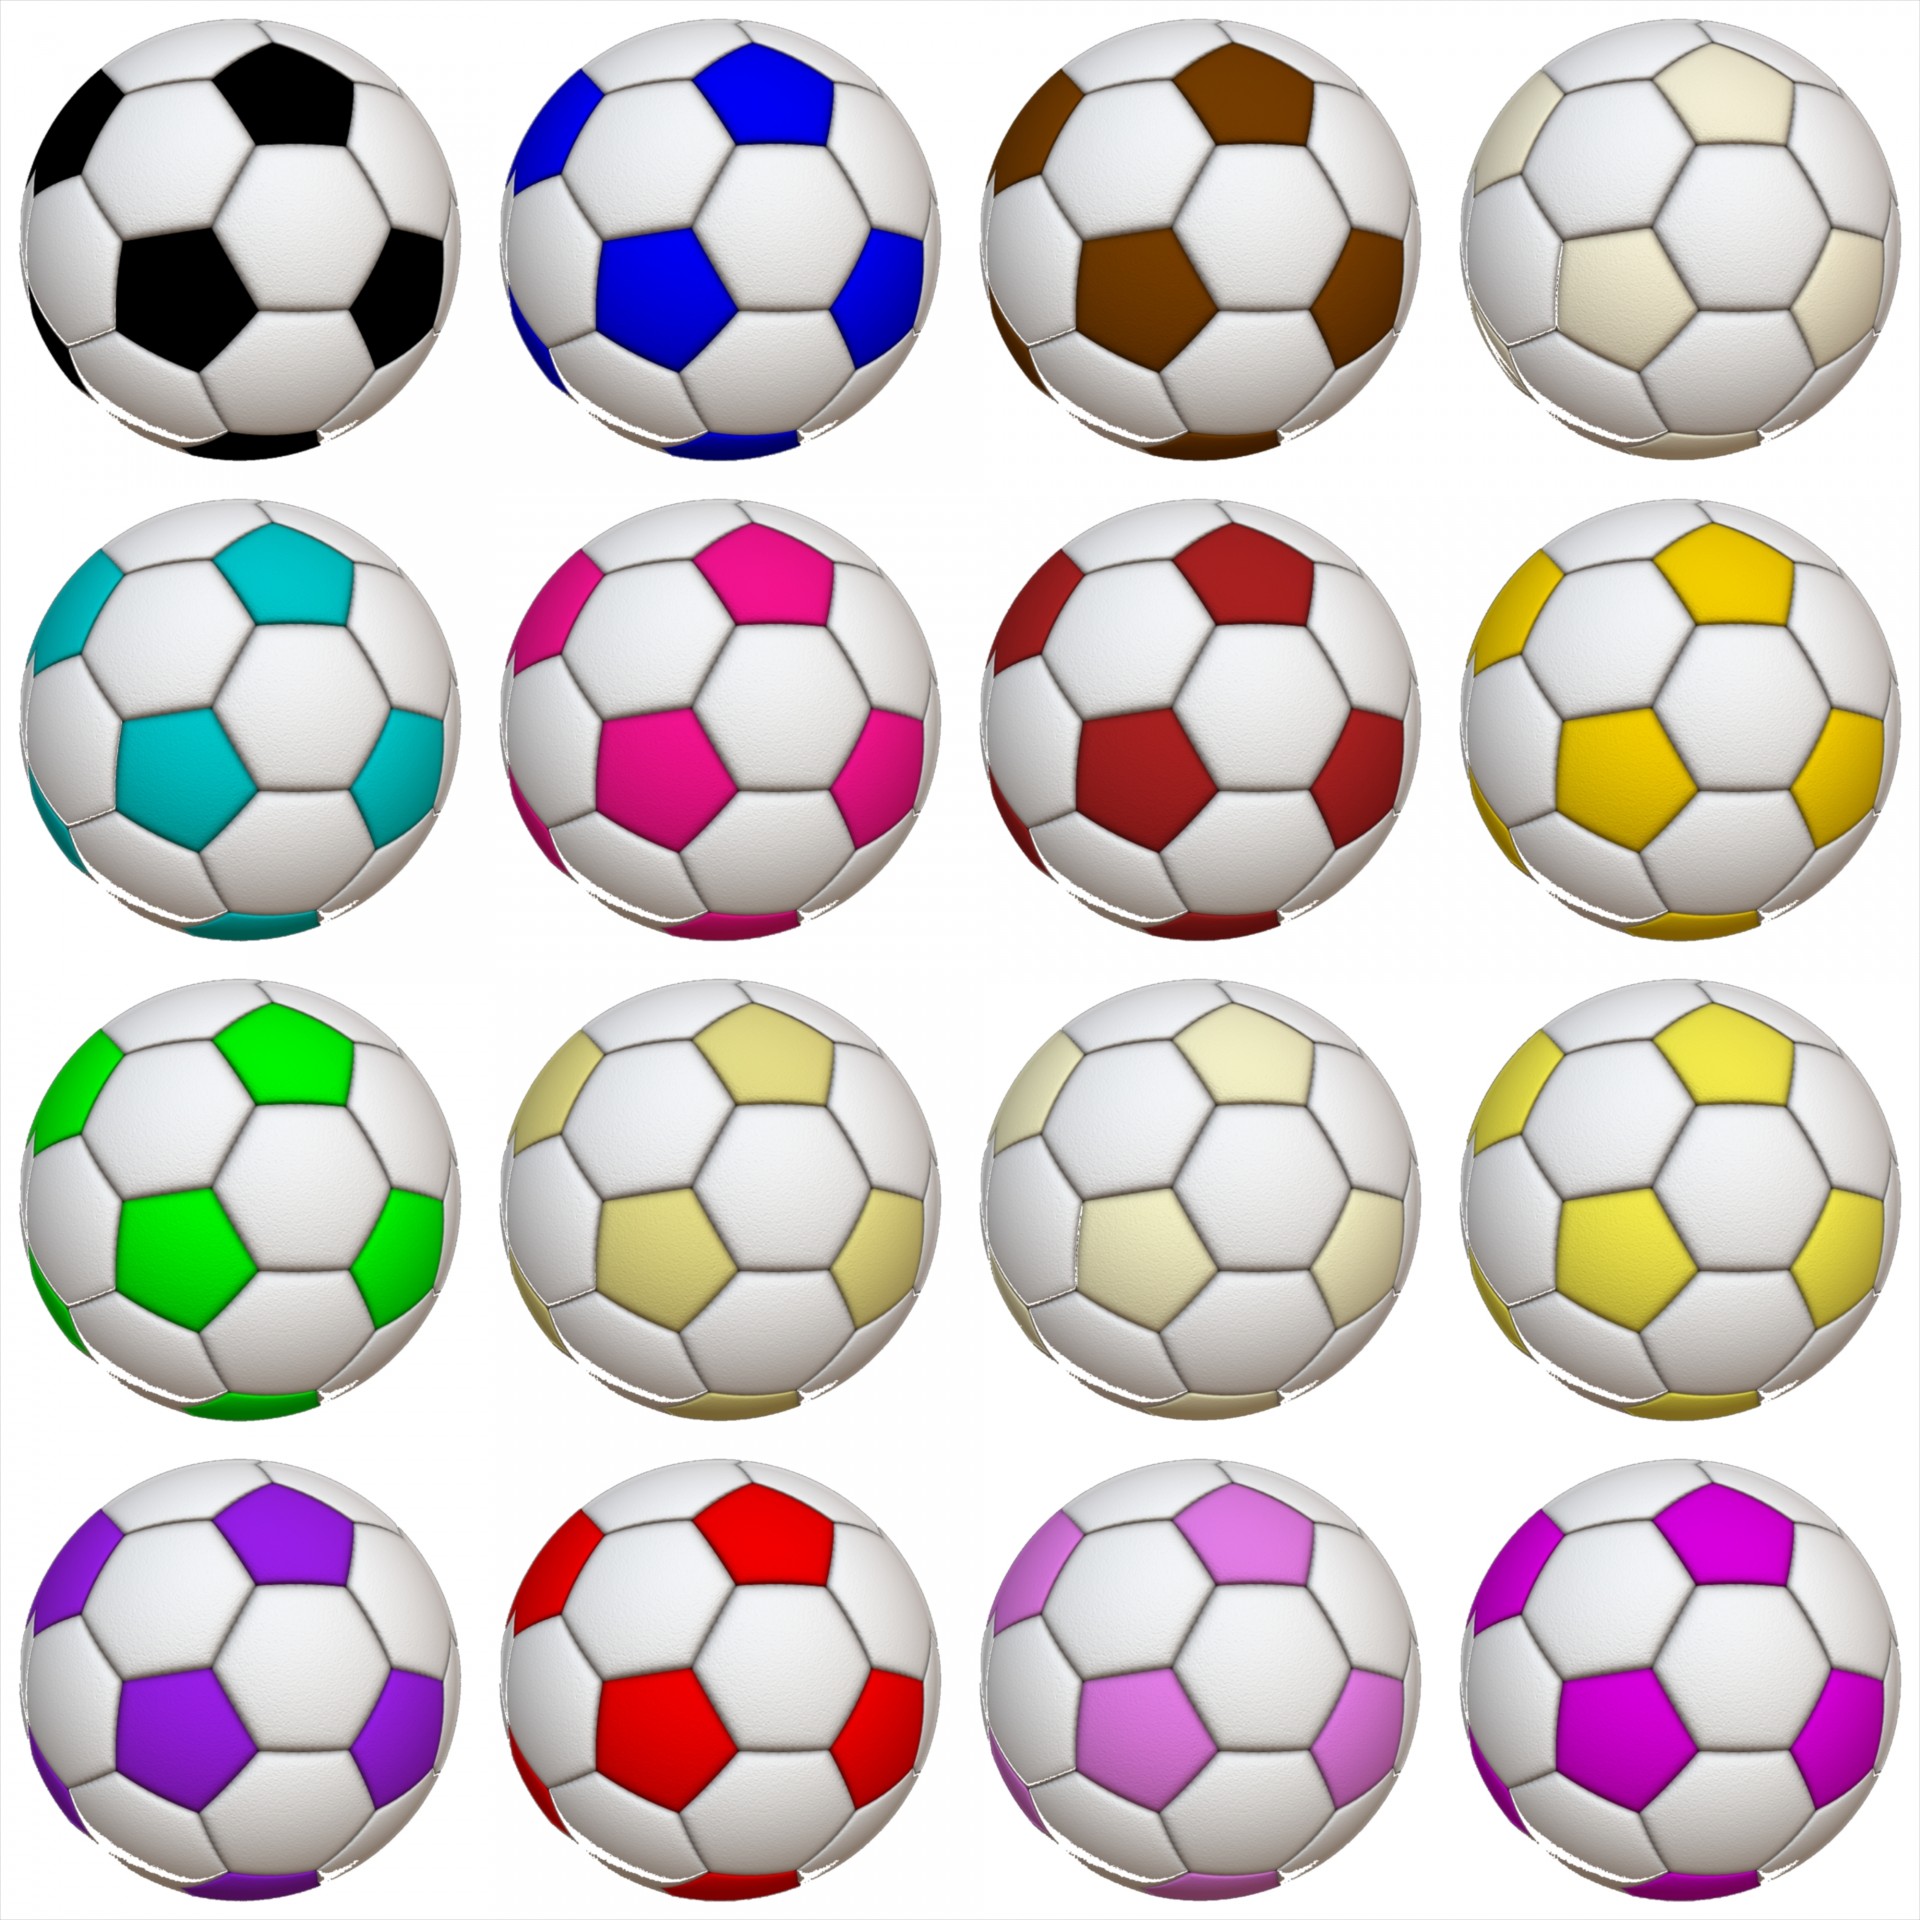 16 ball soccer ball free photo